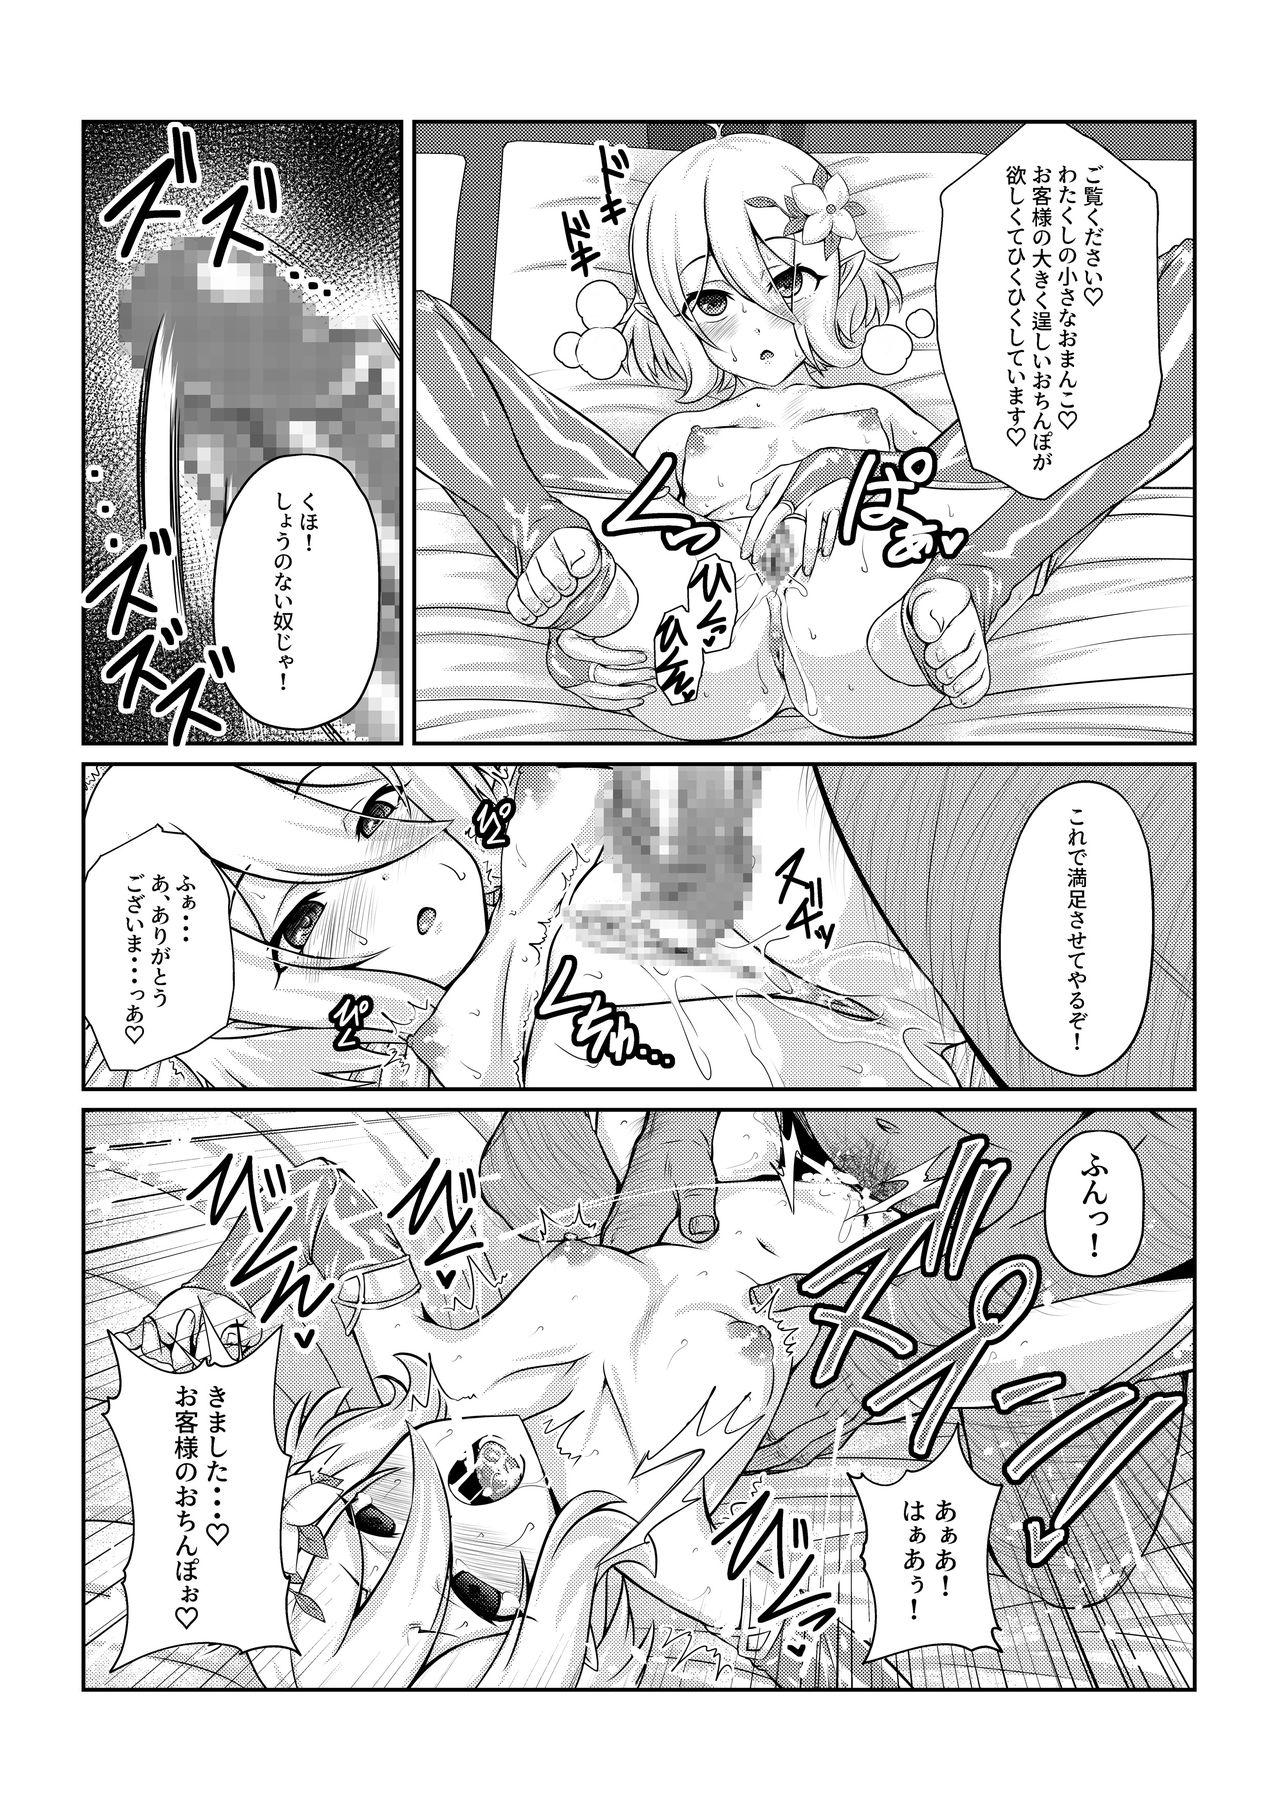 Tributo [Fuwa Fuwa Pinkchan] -Kokoro- (Princess Connect Re:Dive) - Princess connect Bare - Page 9